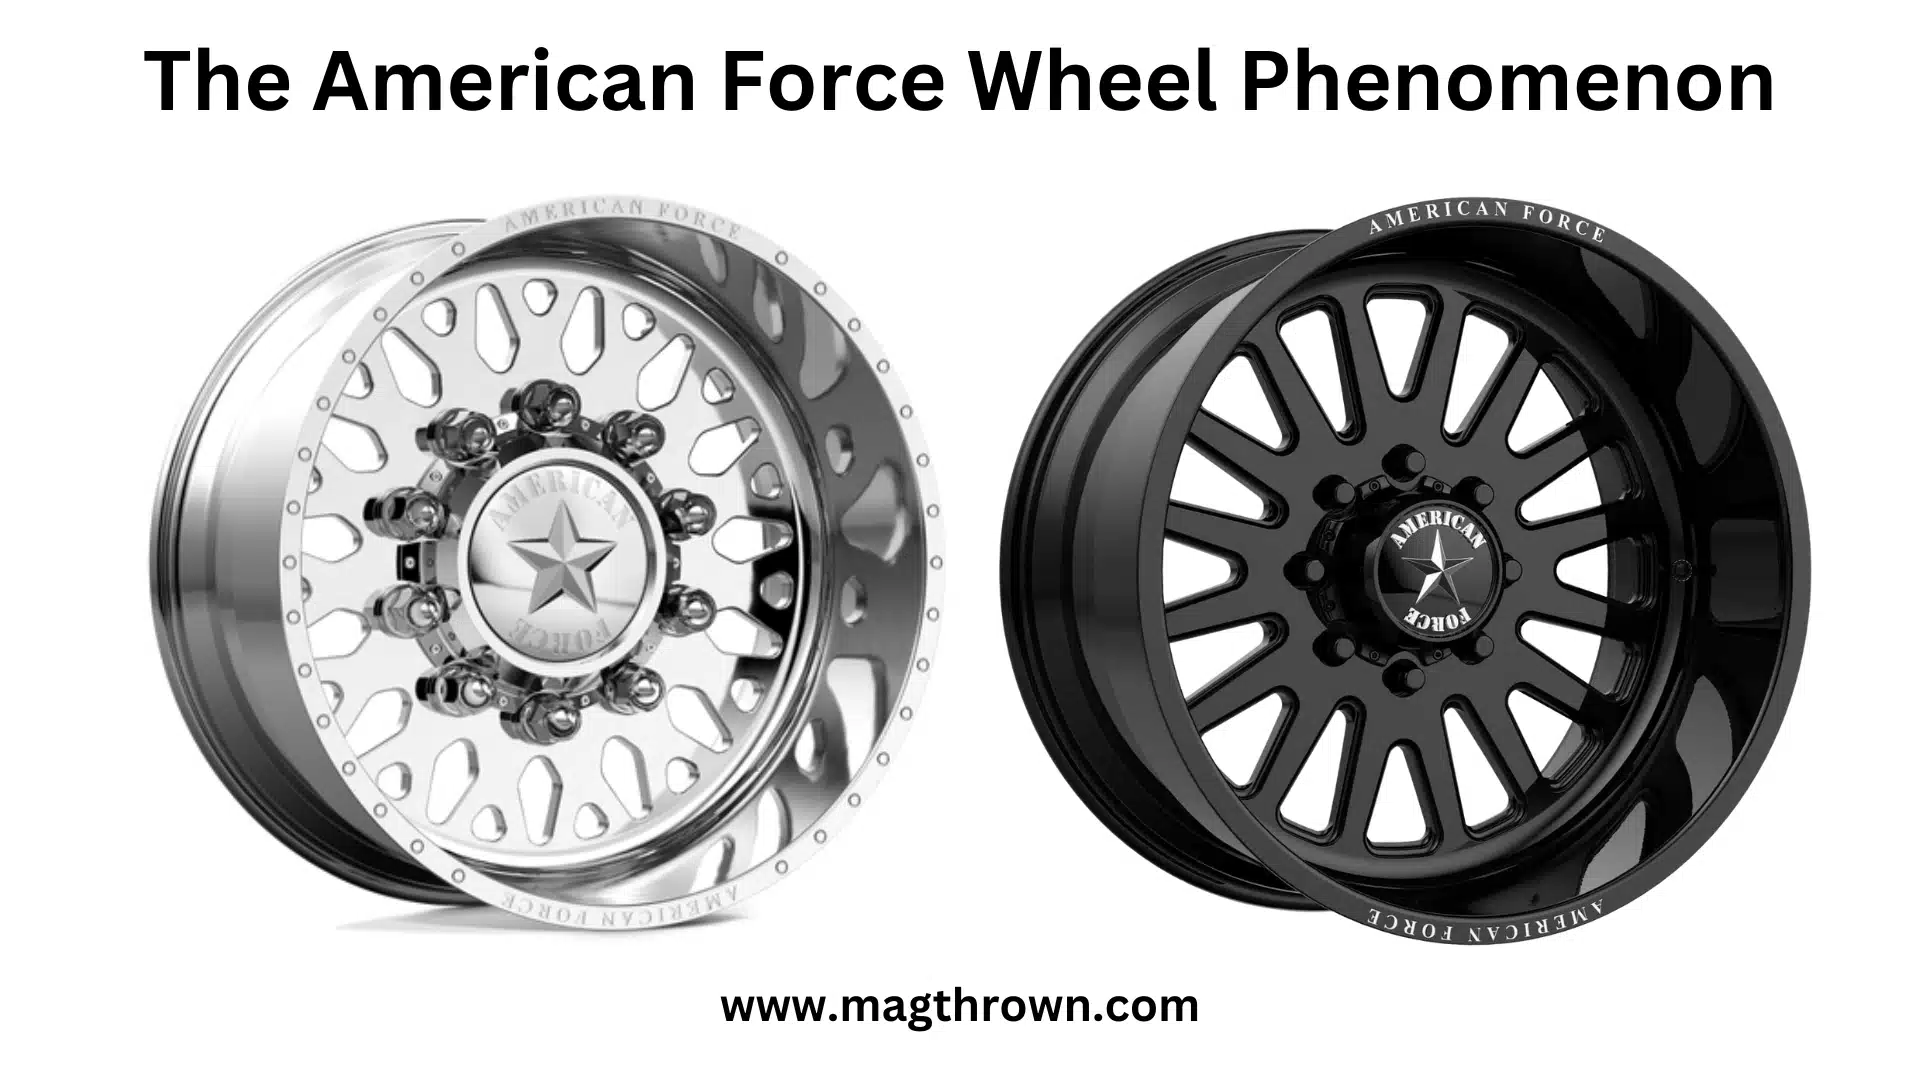 The American Force Wheel Phenomenon